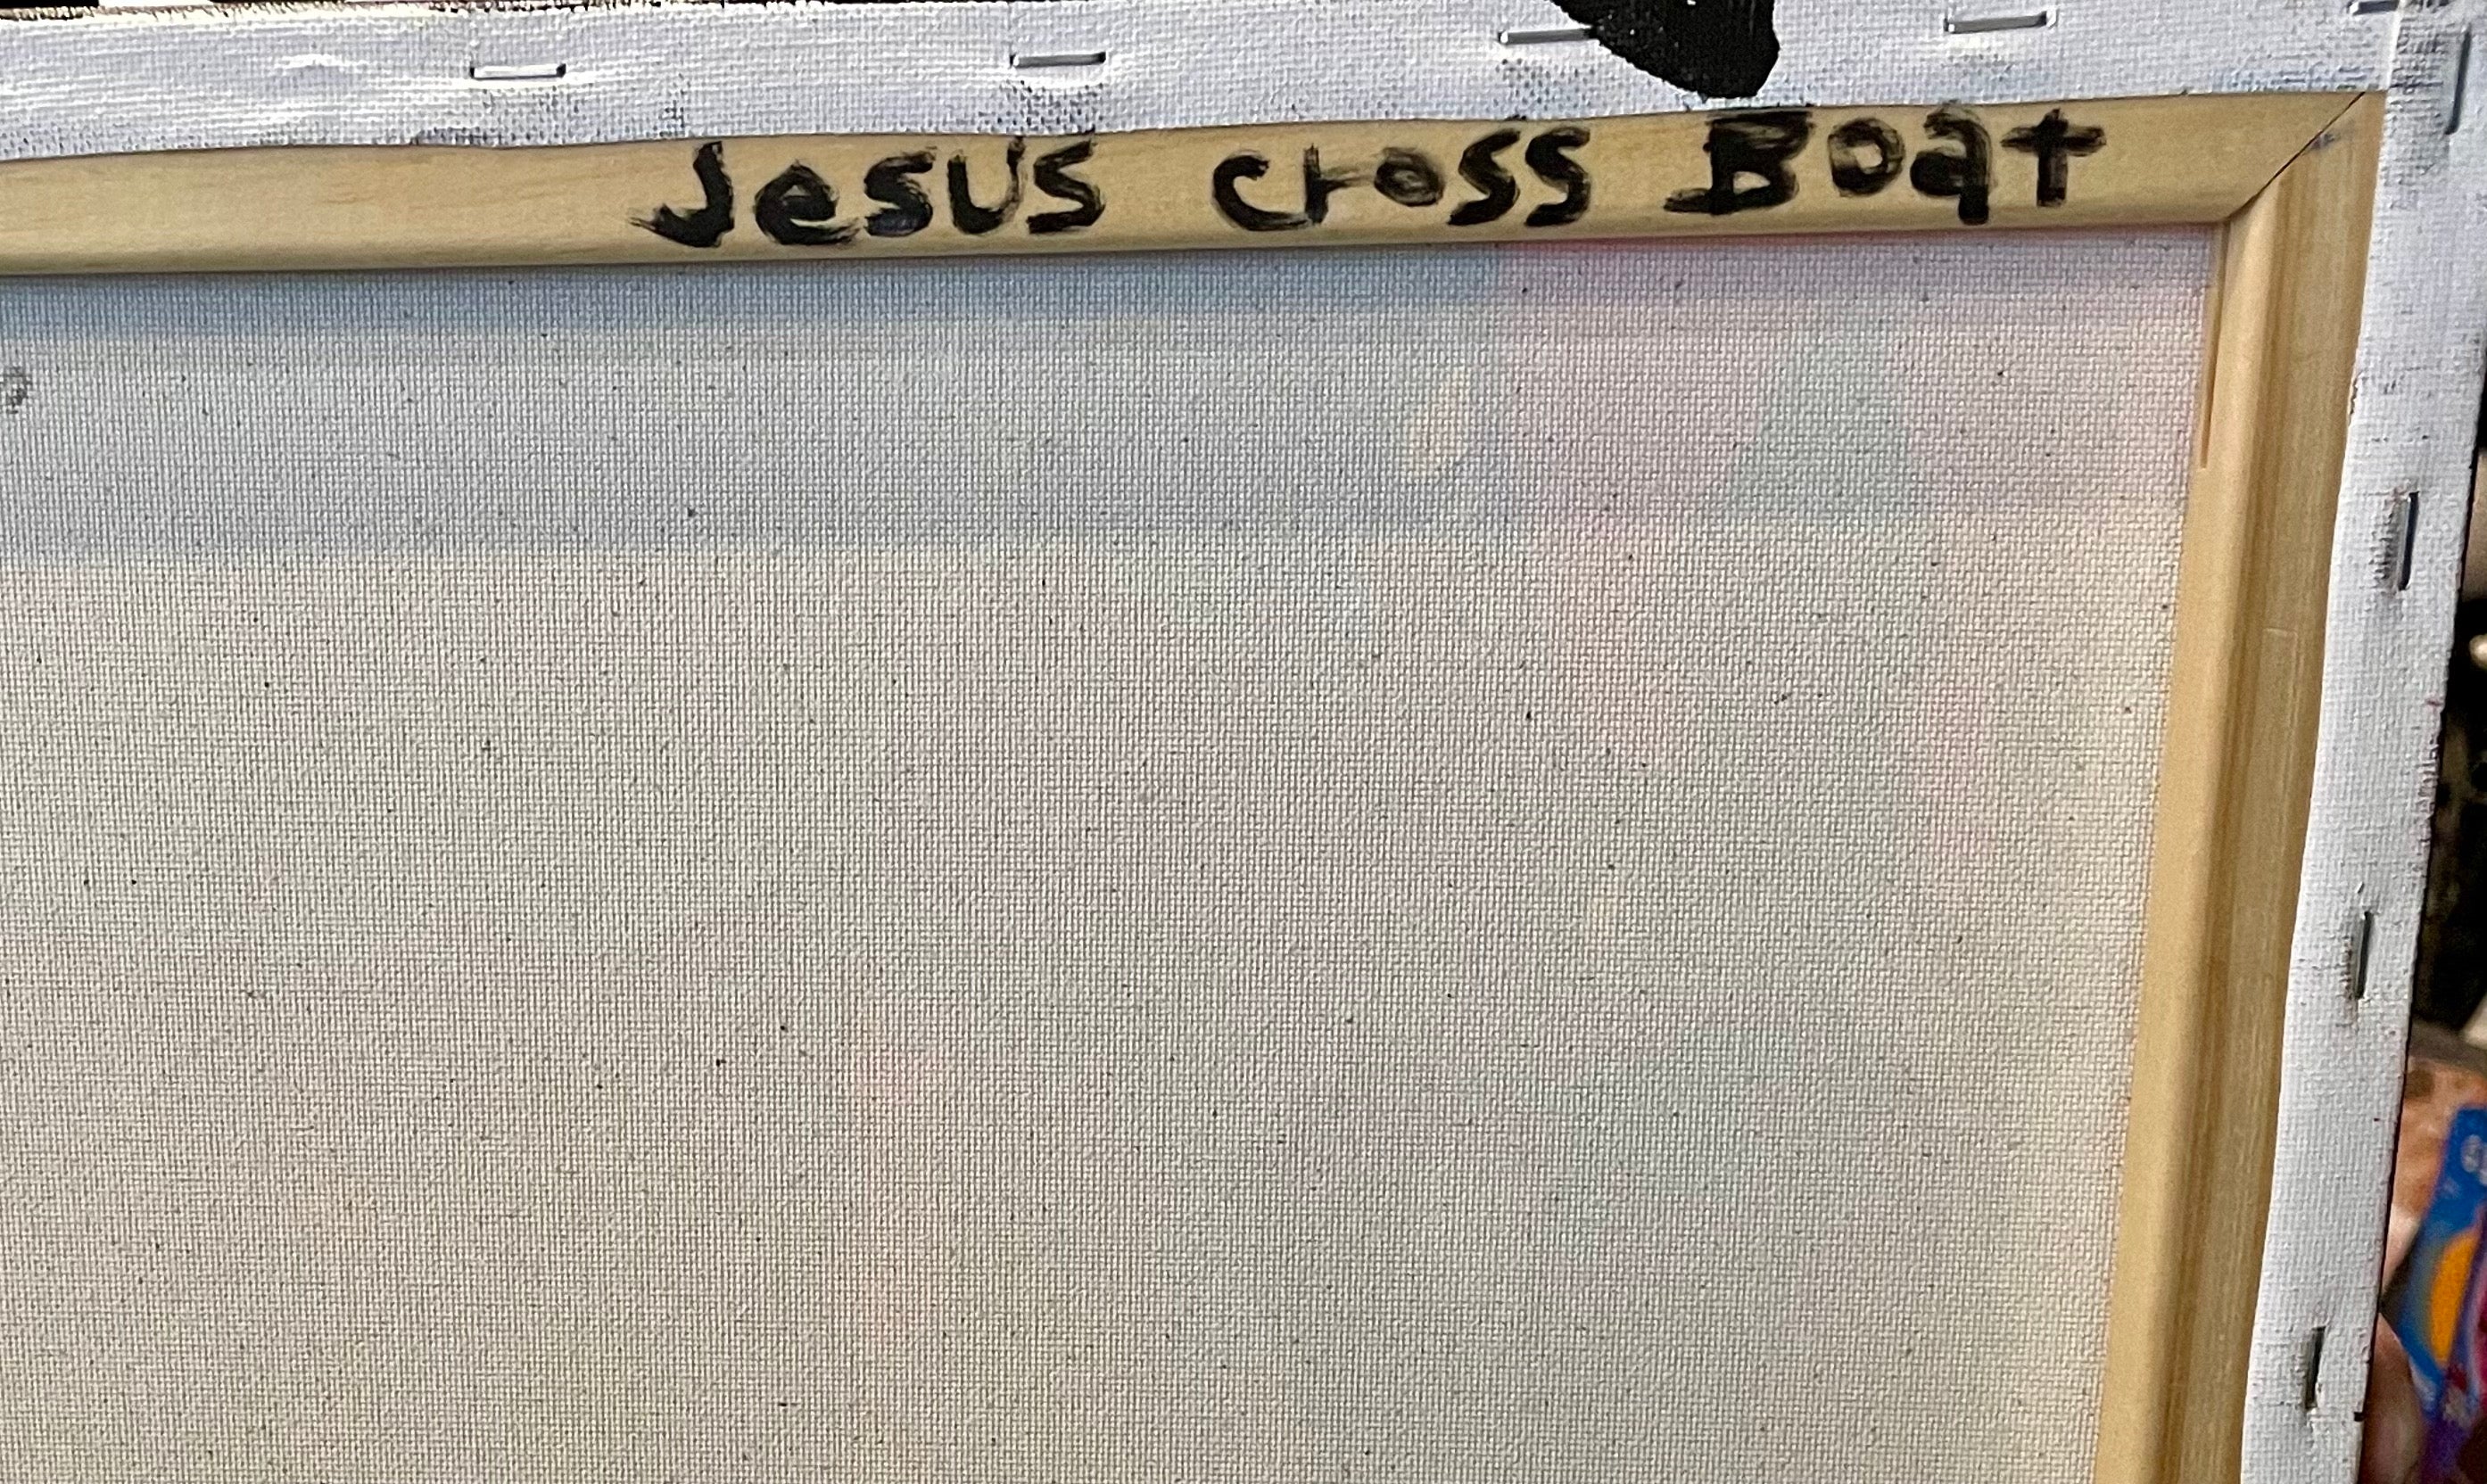 Sequoyah Margroski Acrylic Painting on Canvas - "Jesus Cross Boat"